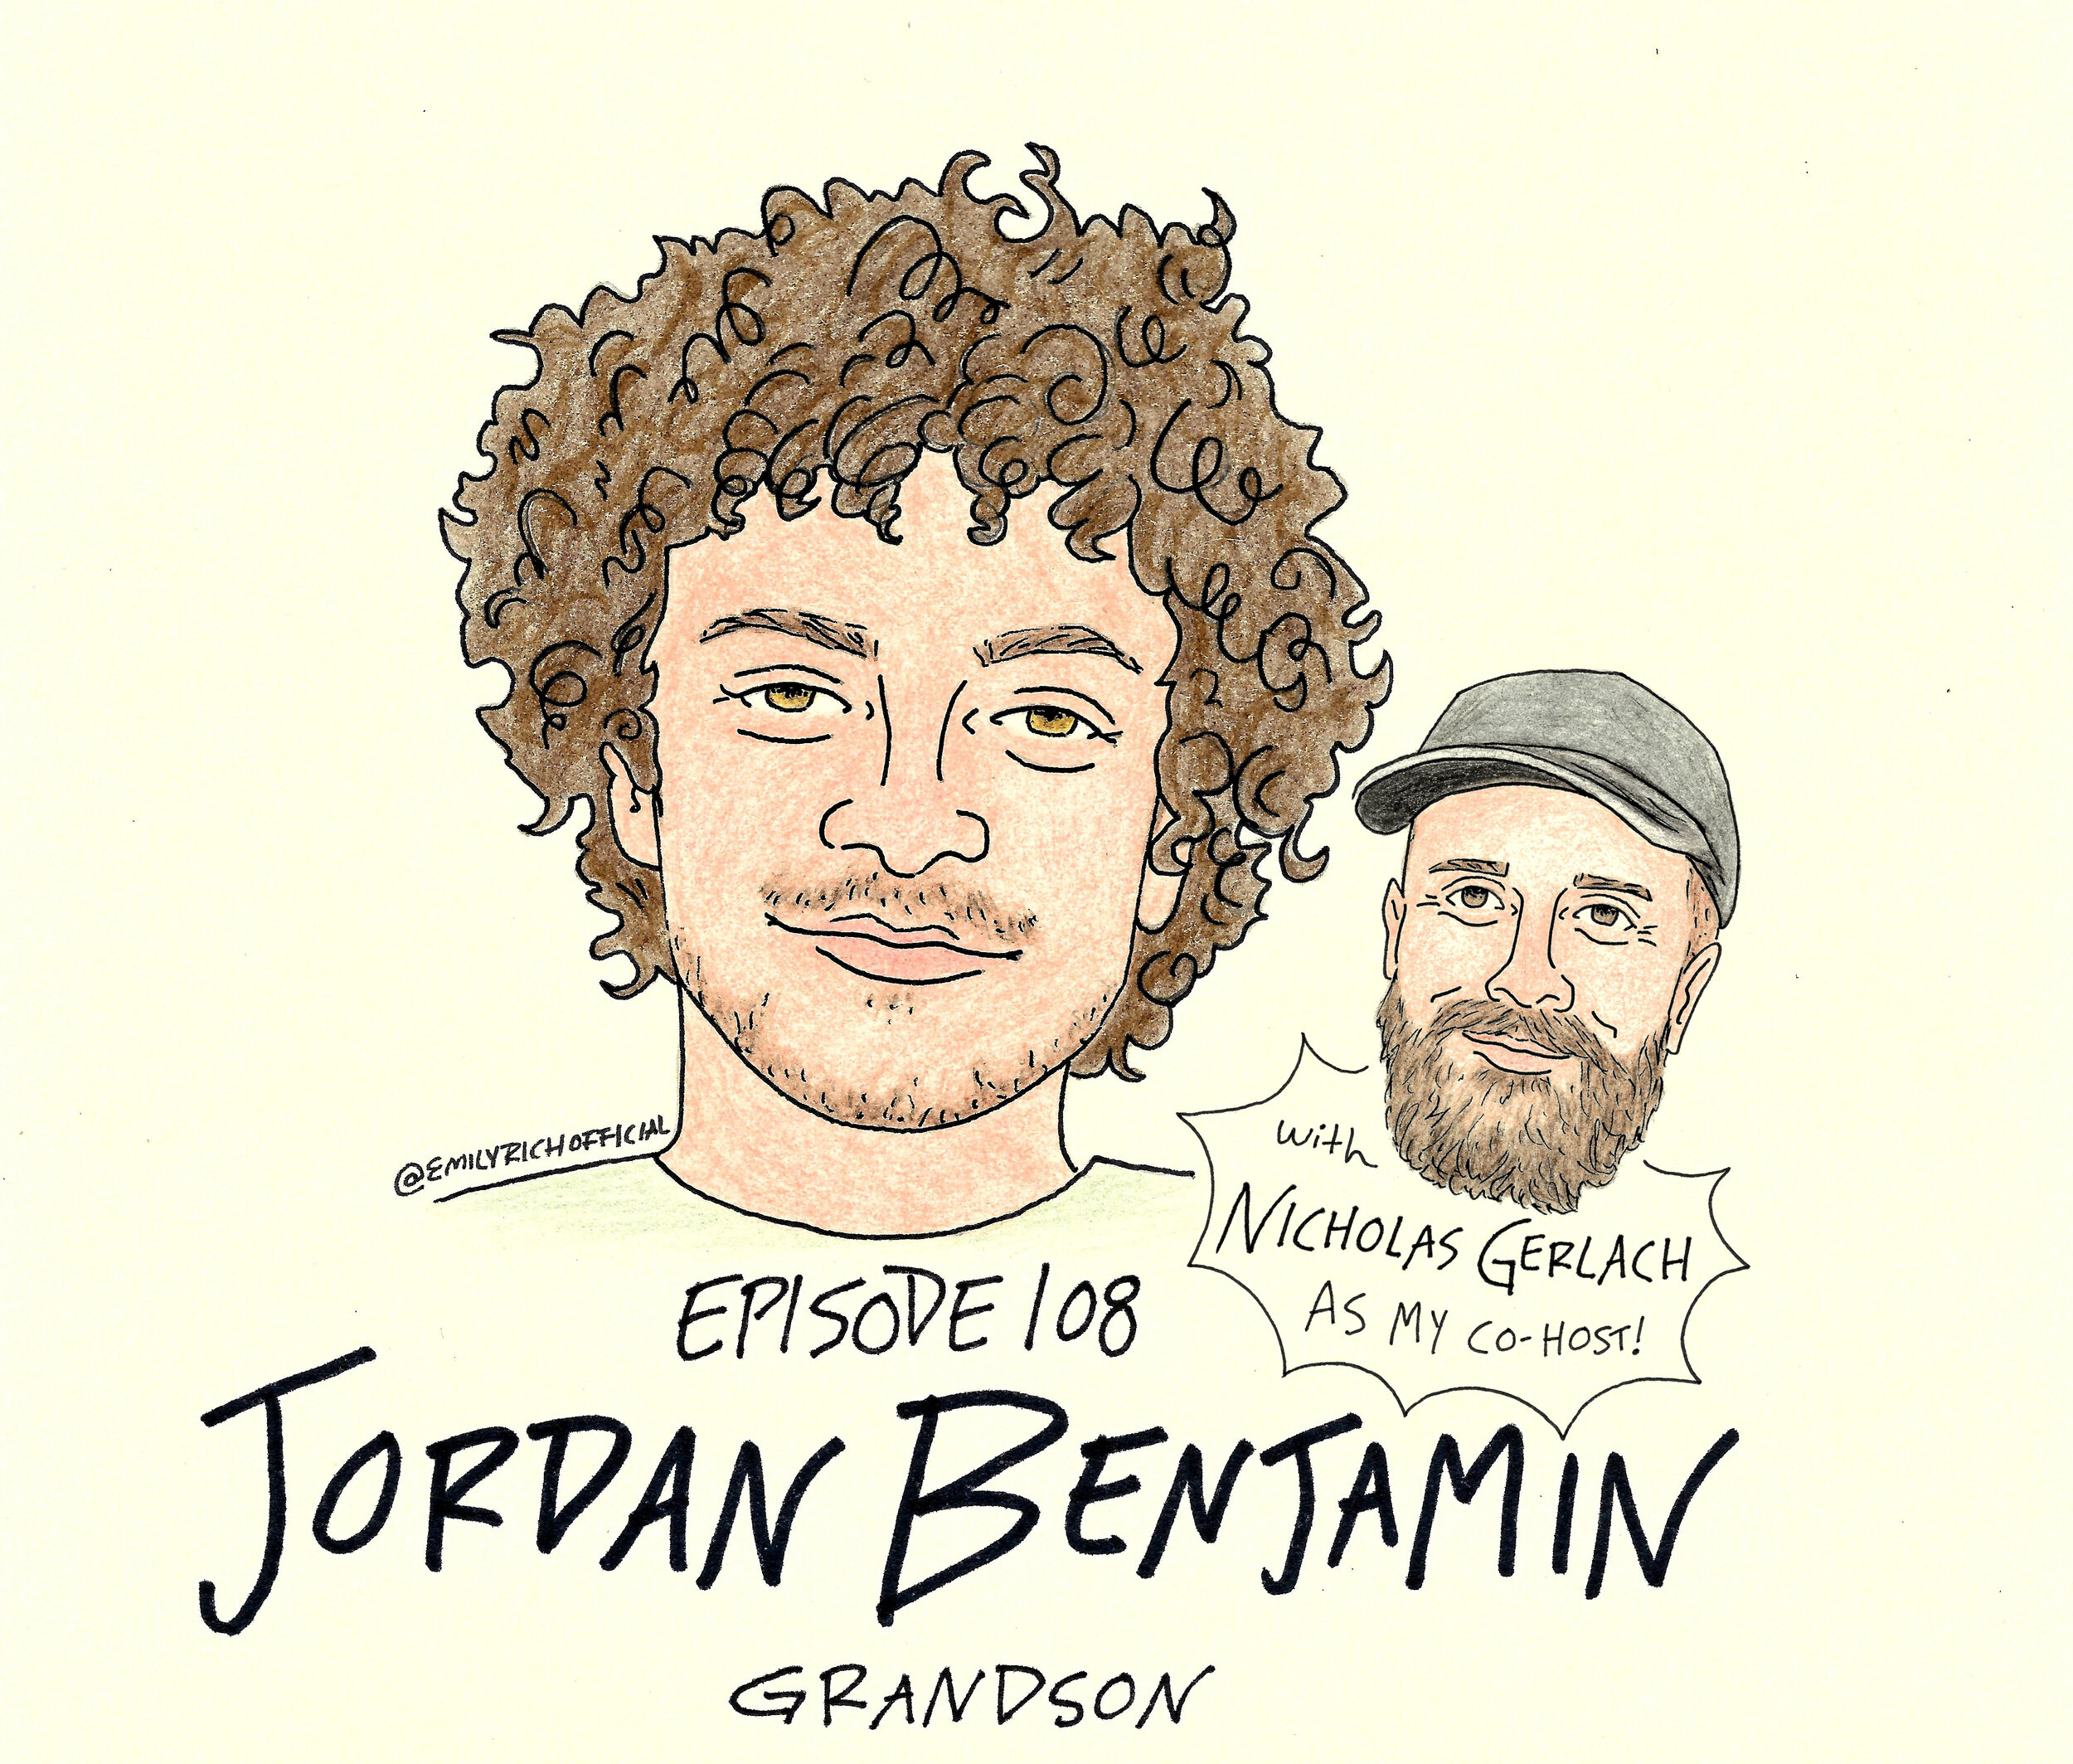 Episode 108: Jordan Edward Benjamin (Grandson) — Andy Frasco's World Saving  Podcast